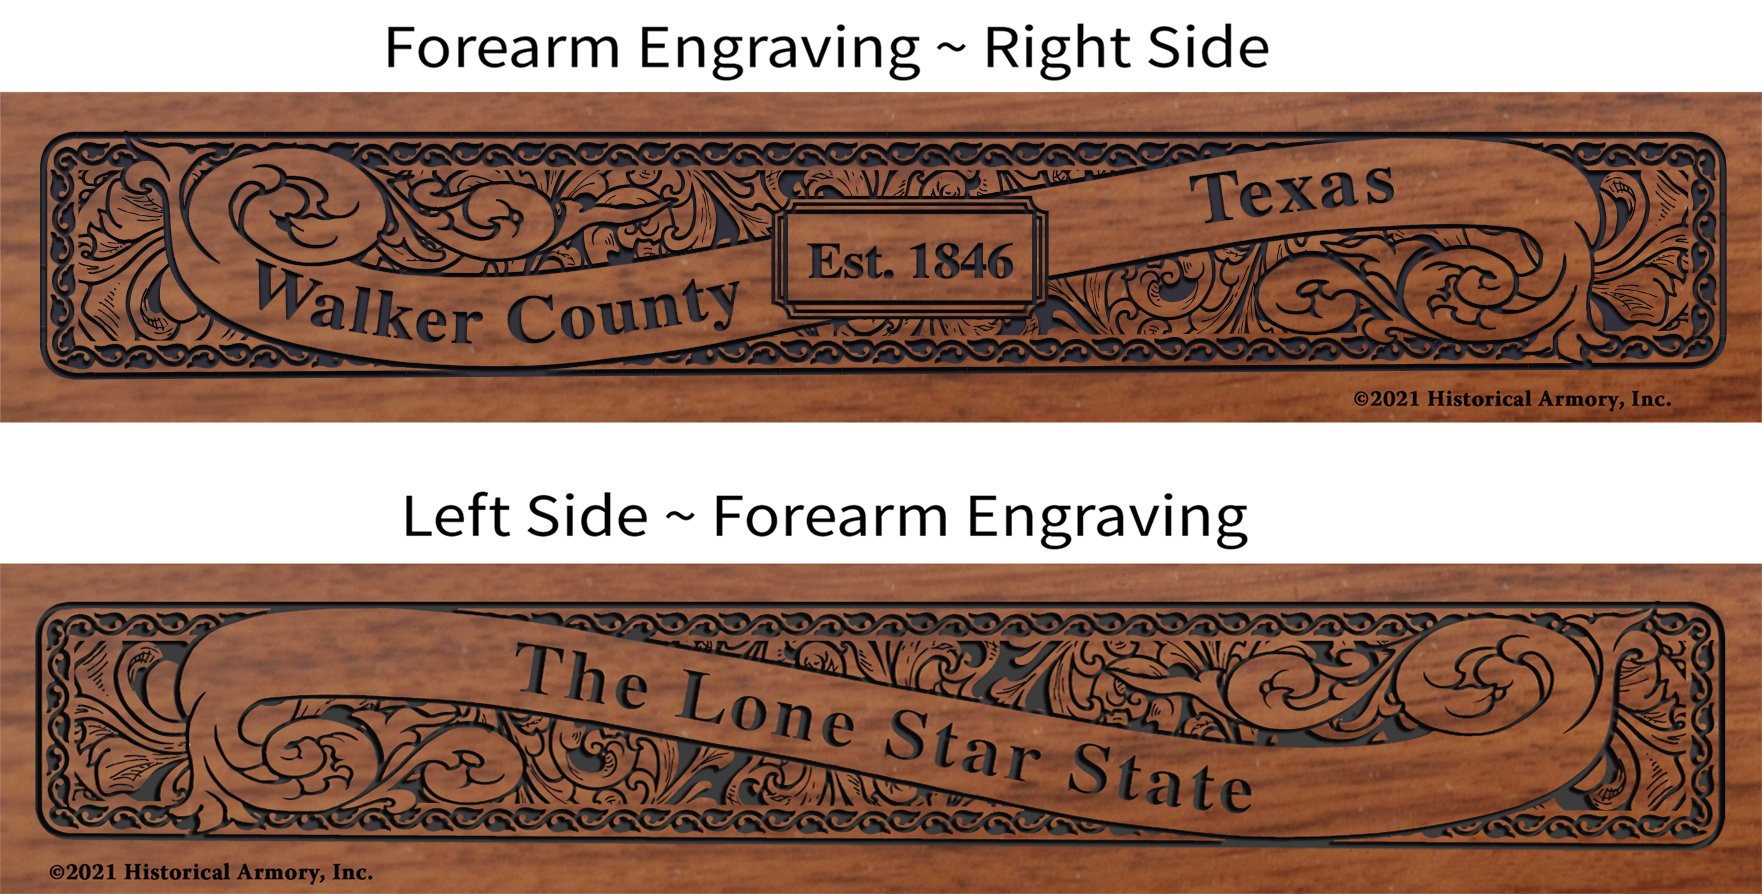 Walker County Texas Establishment and Motto History Engraved Rifle Forearm